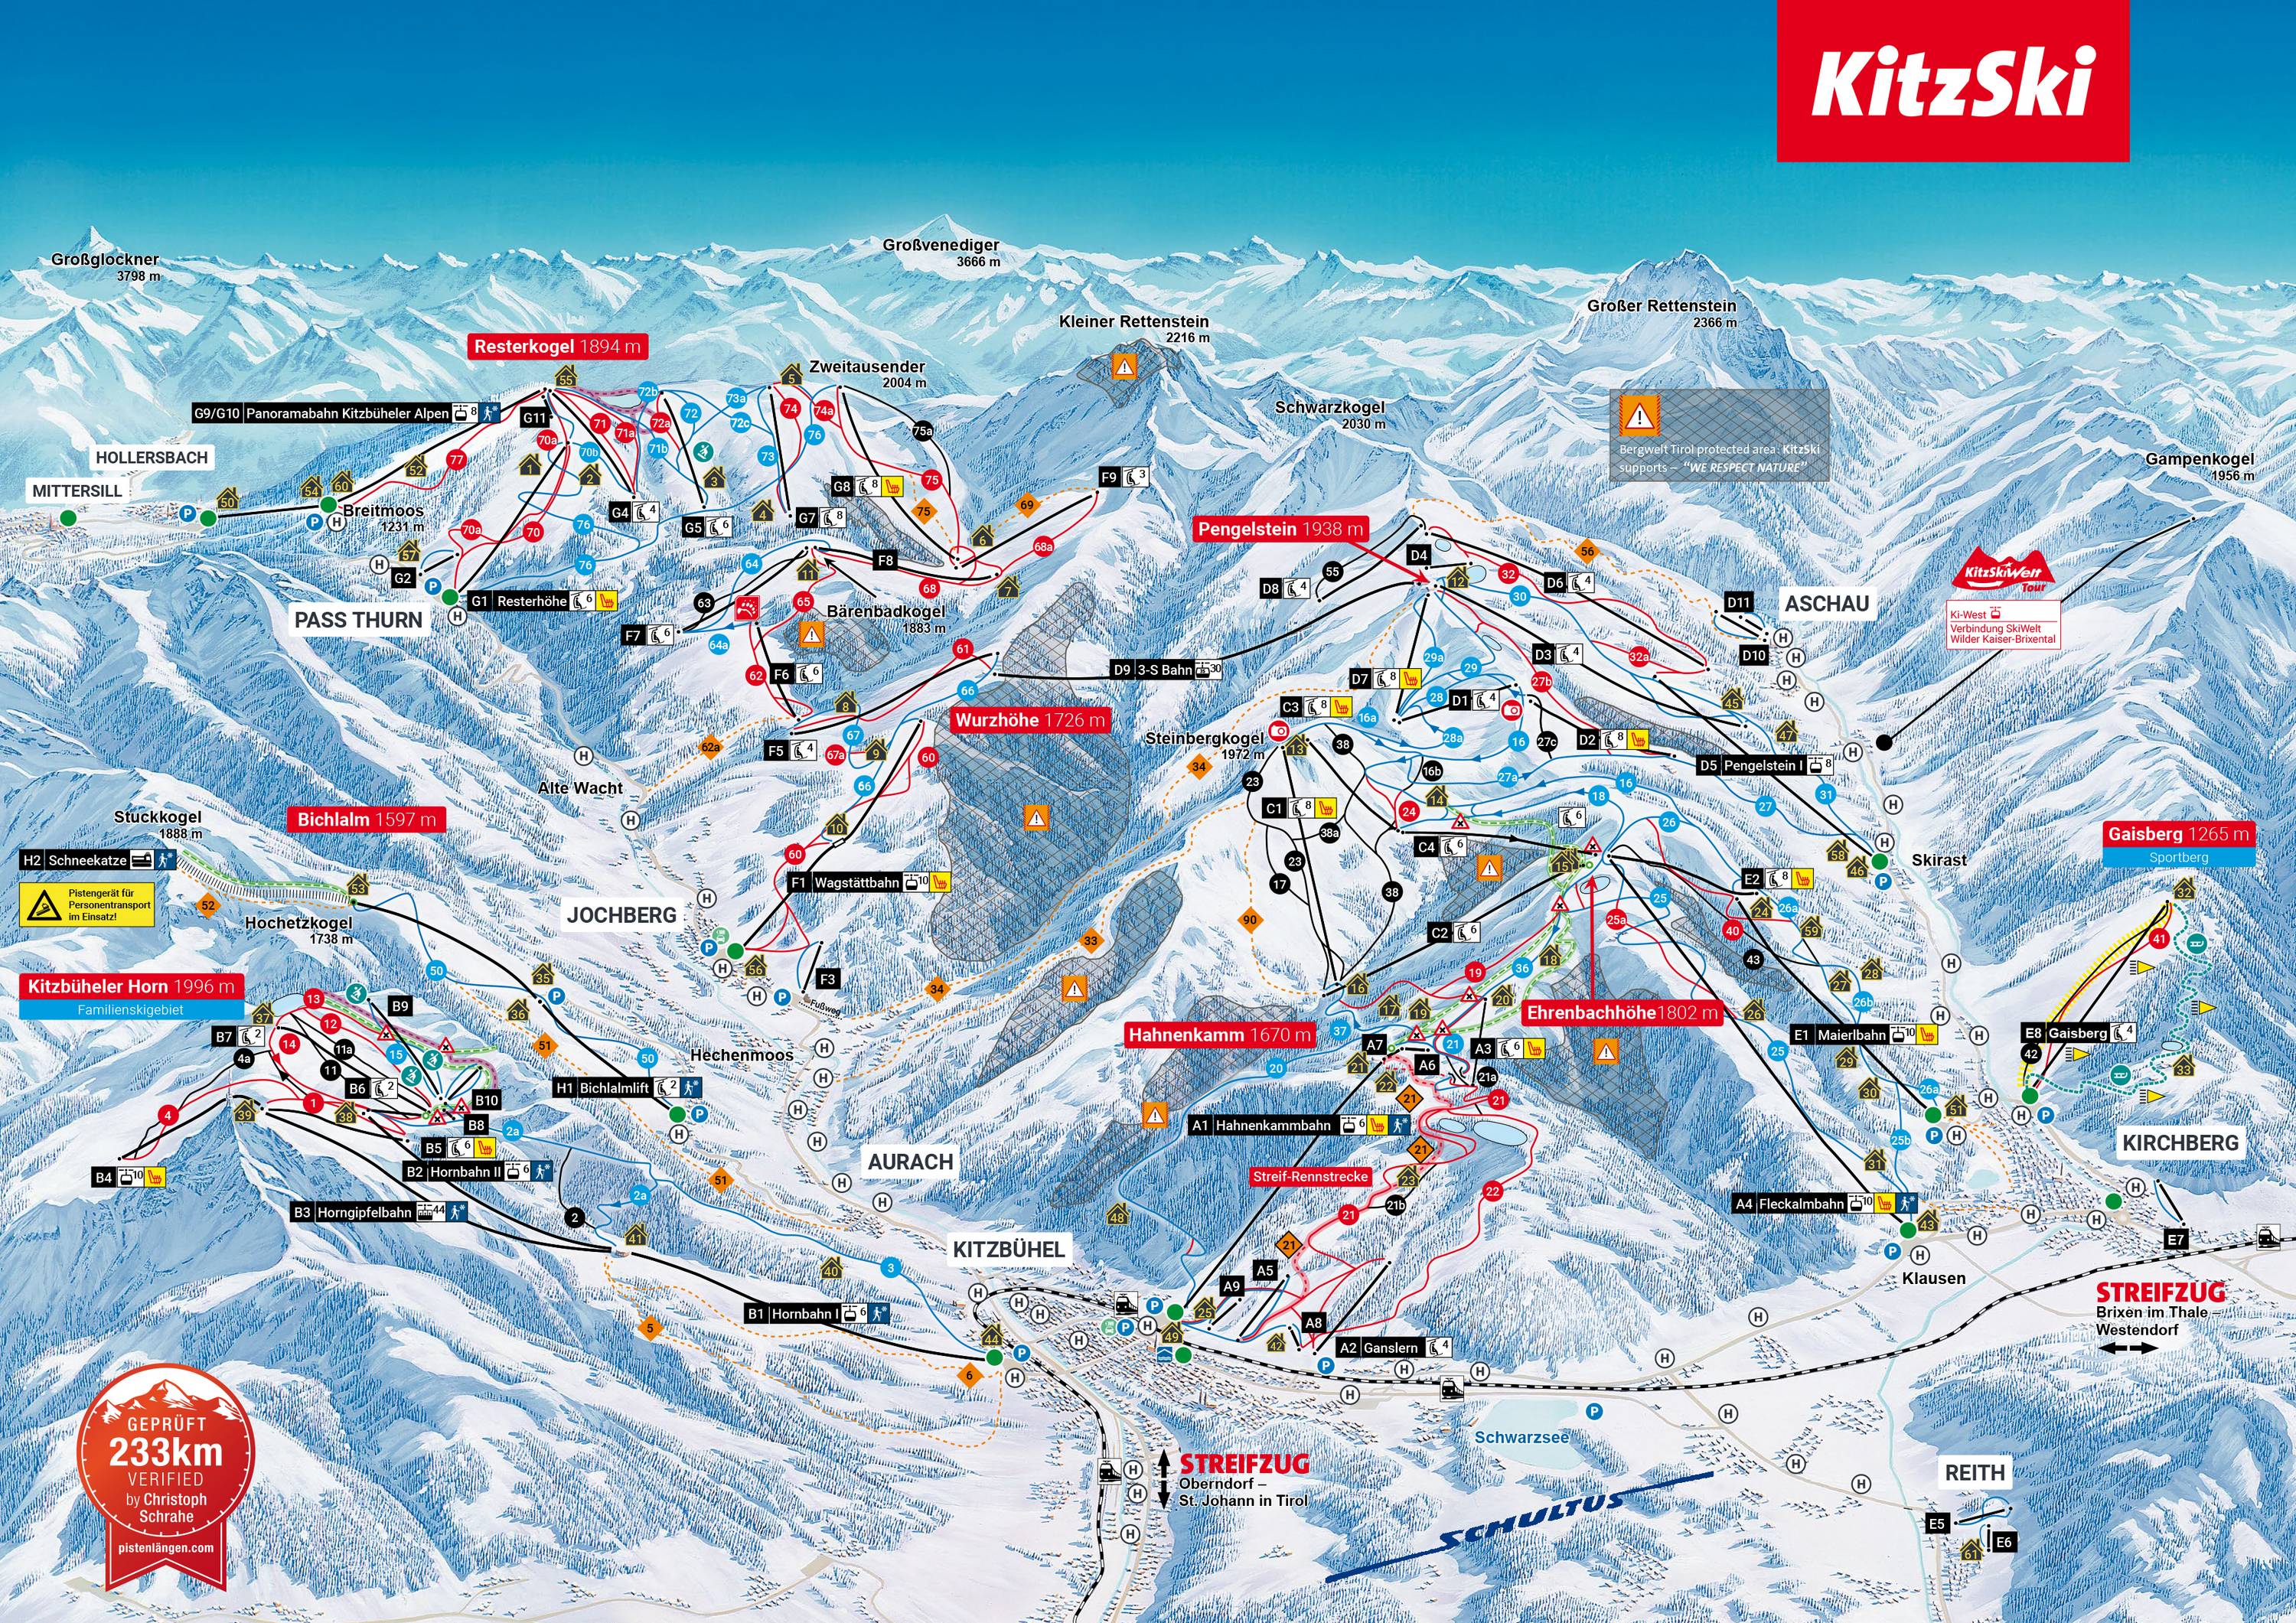 KitzSki – Kitzbühel/Kirchberg